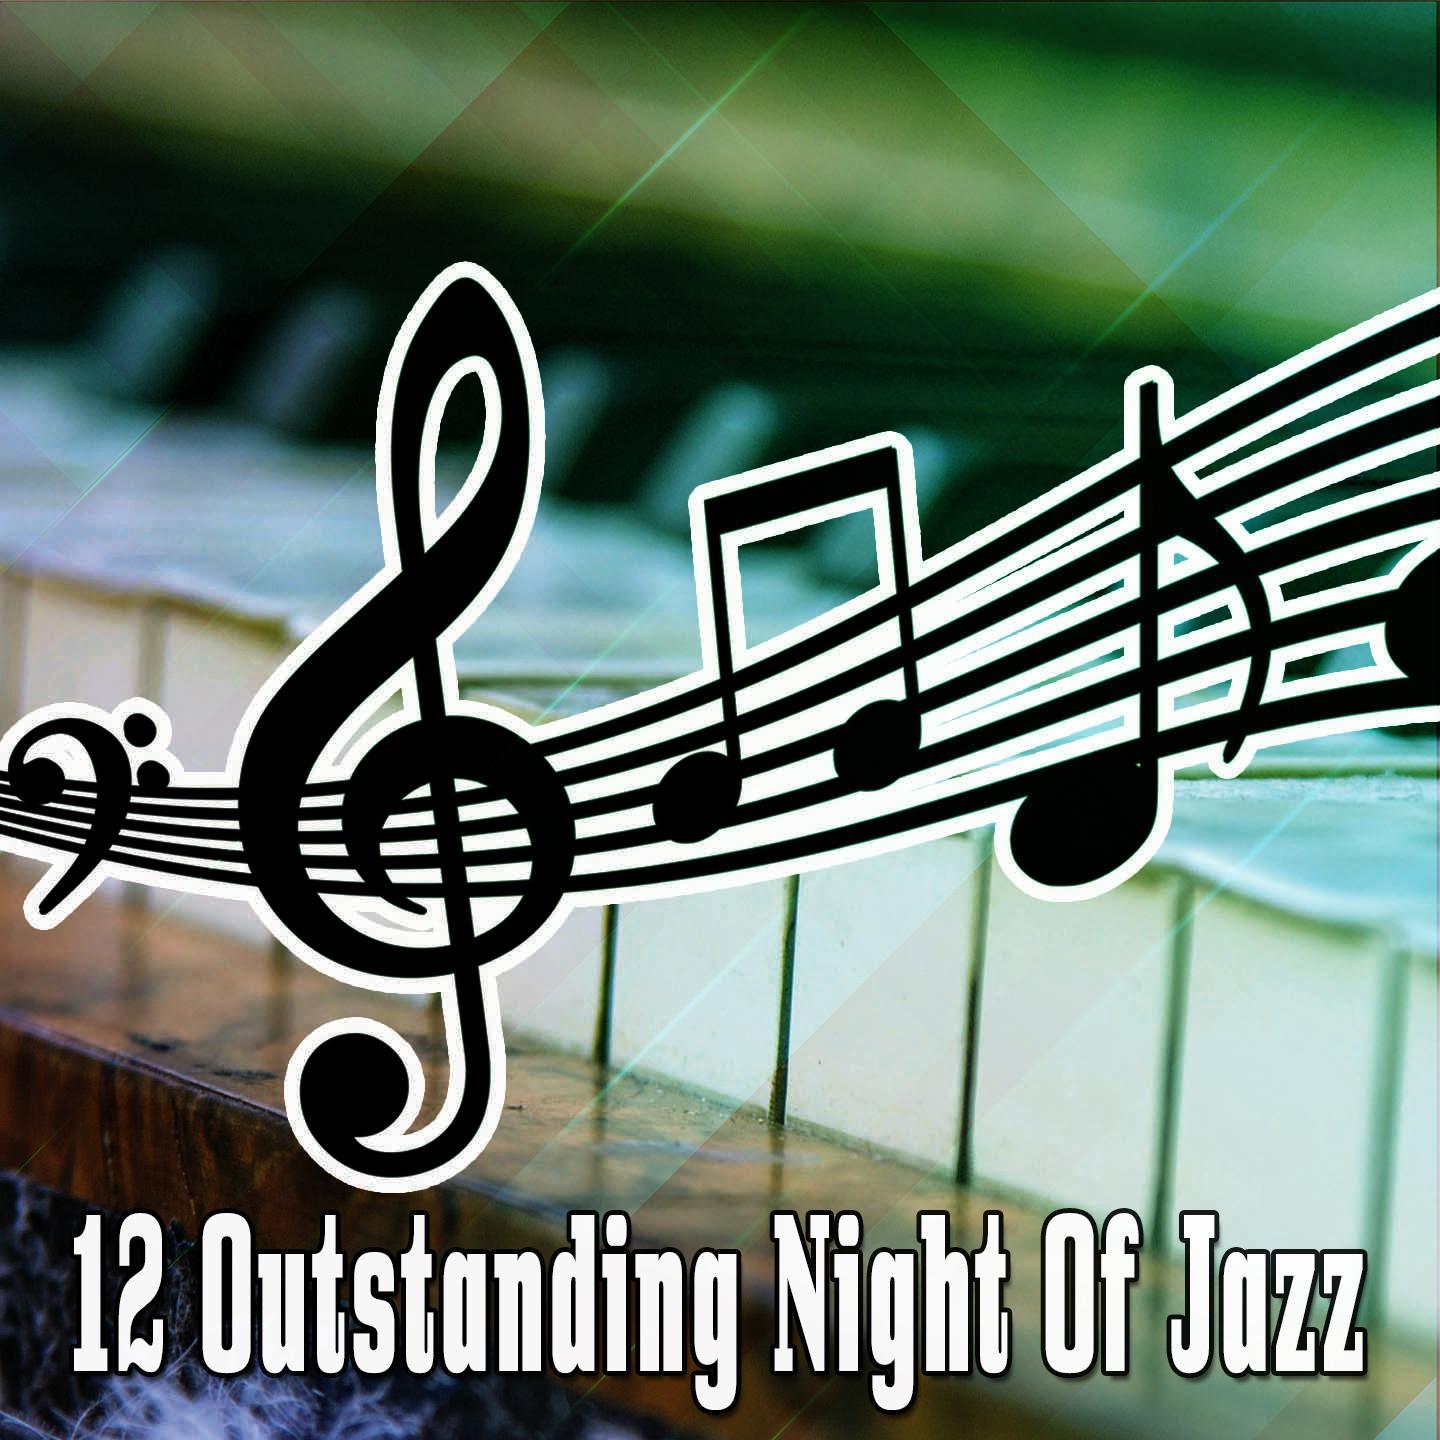 12 Outstanding Night of Jazz